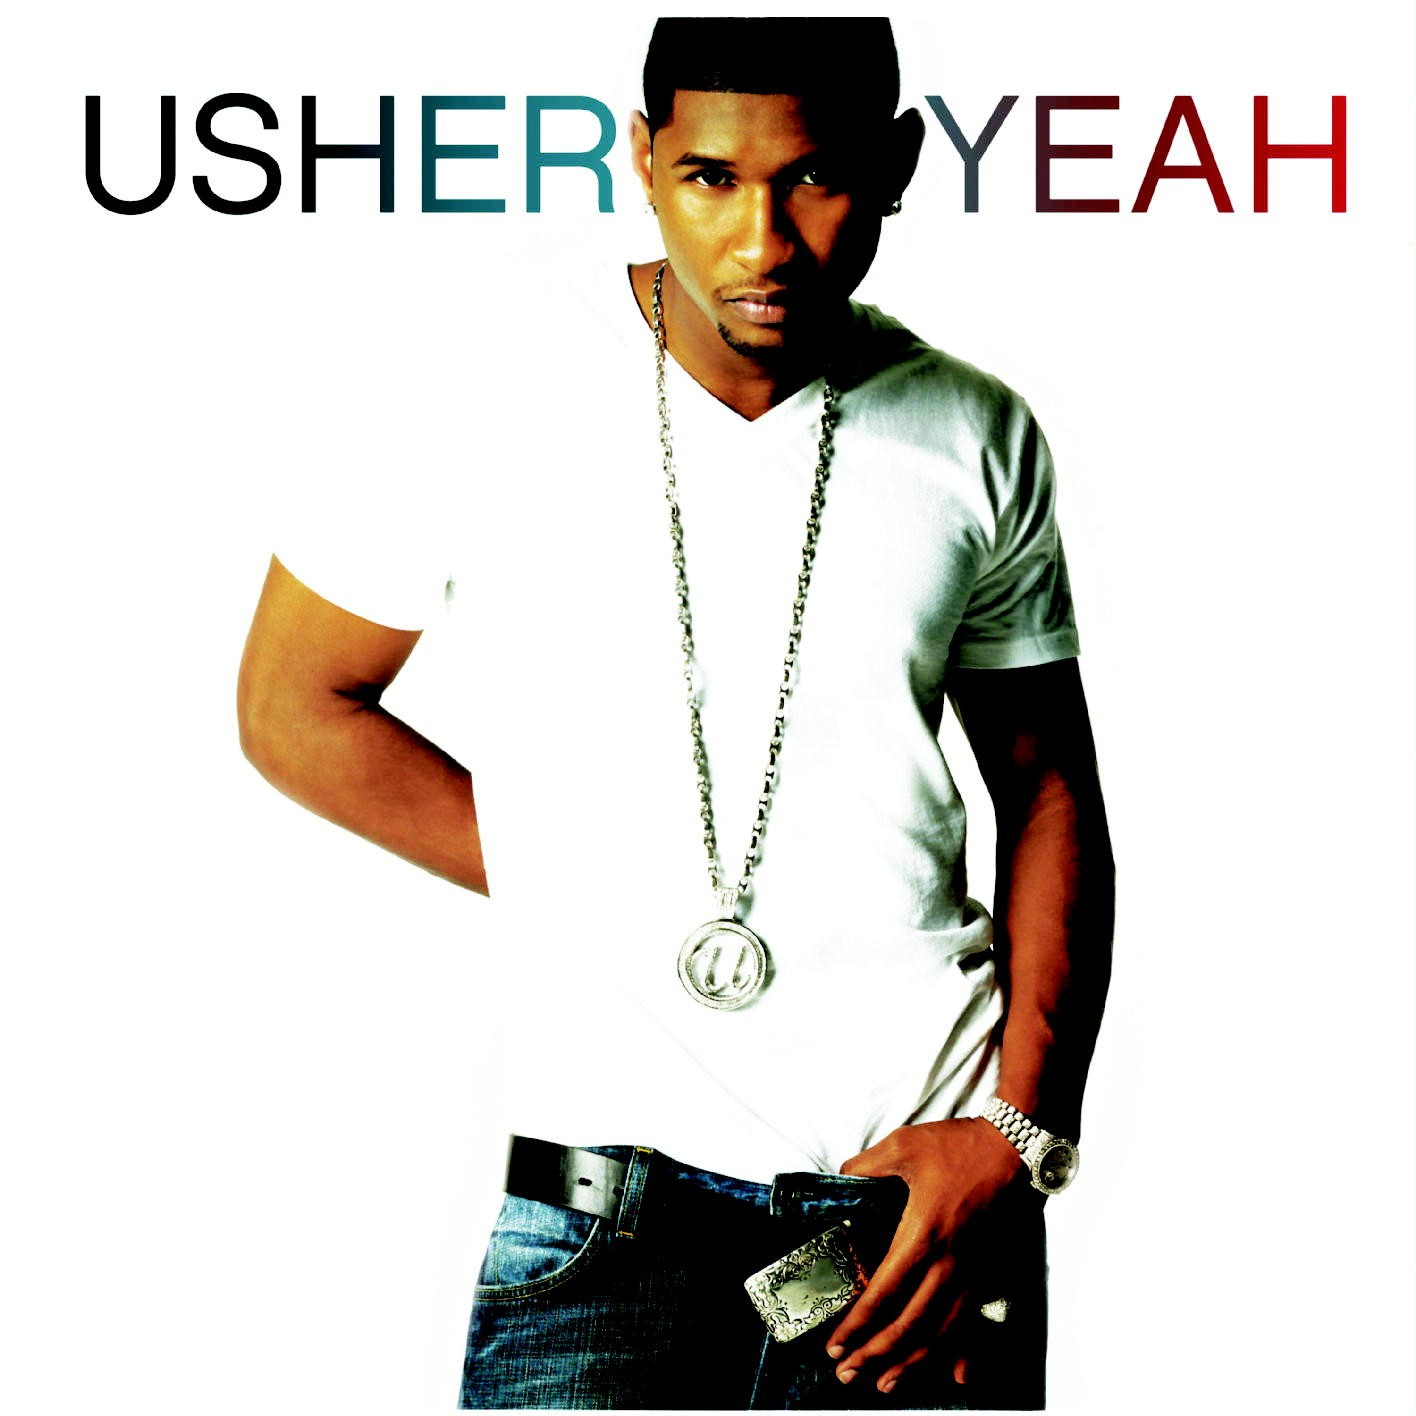 Usher+-+Yeah+(Official+Single+Cover).jpg